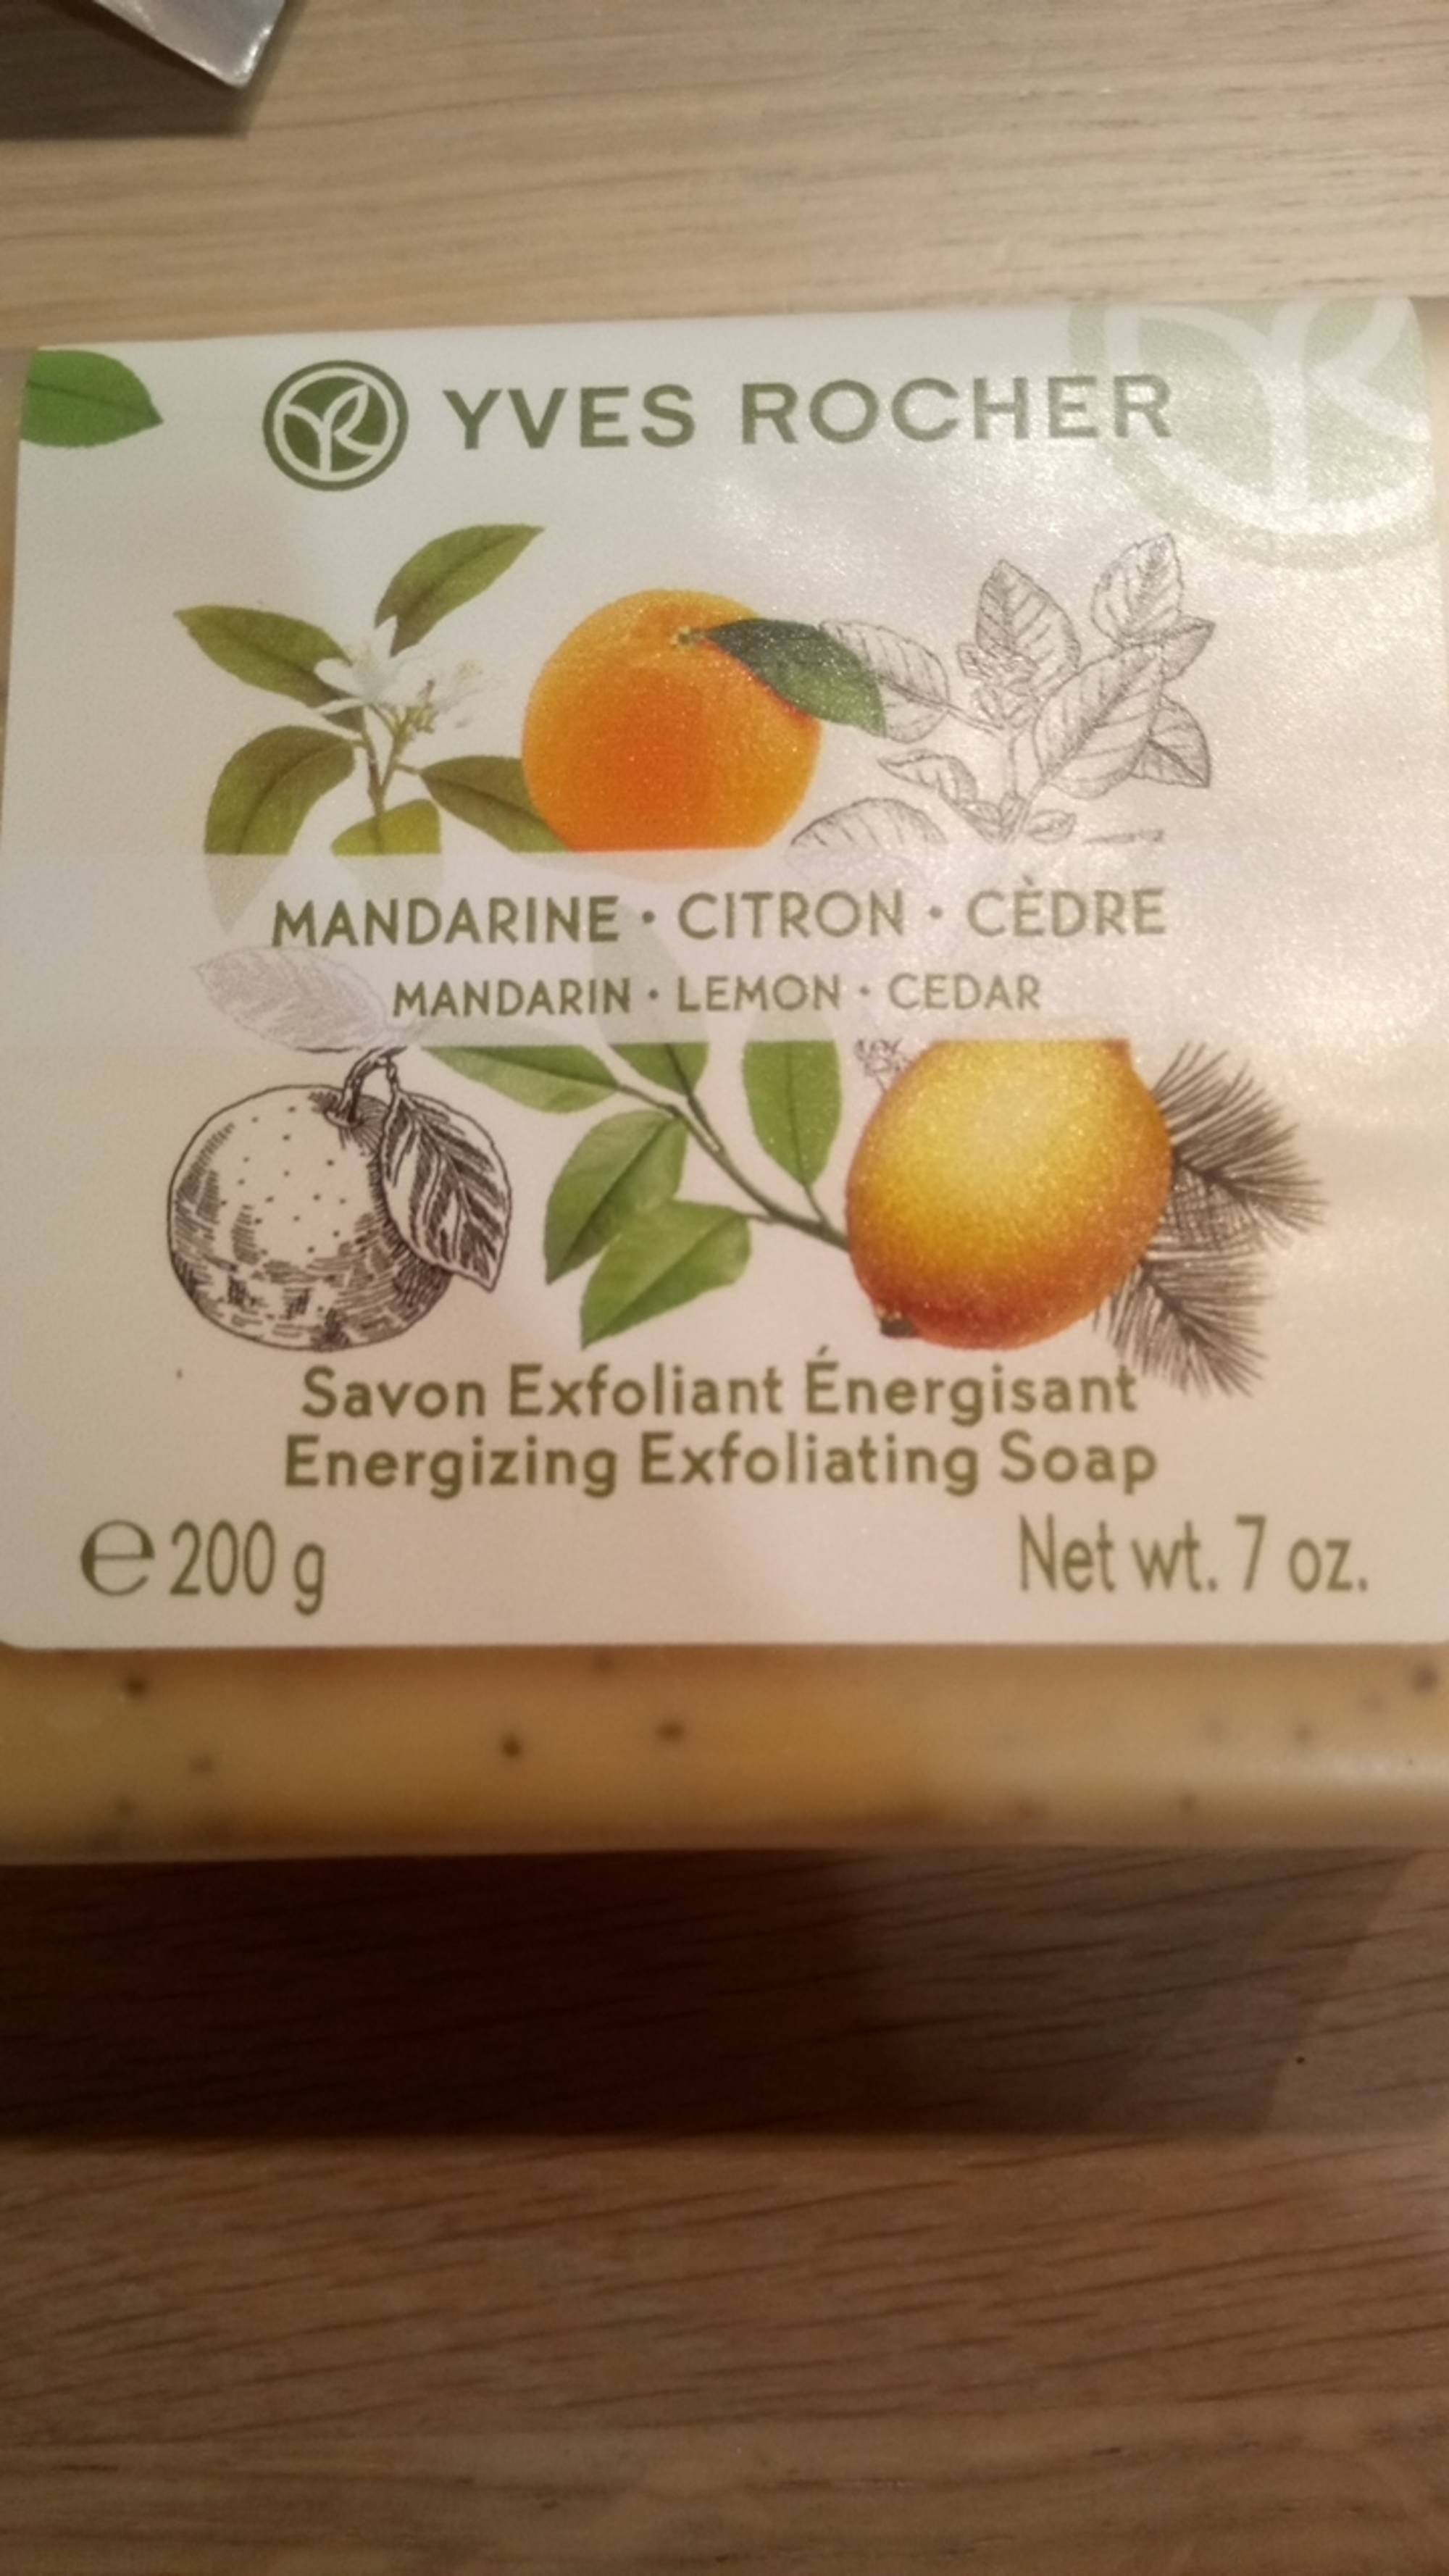 YVES ROCHER - Mandarine Citron Cèdre - Savon exfoliant énergisant